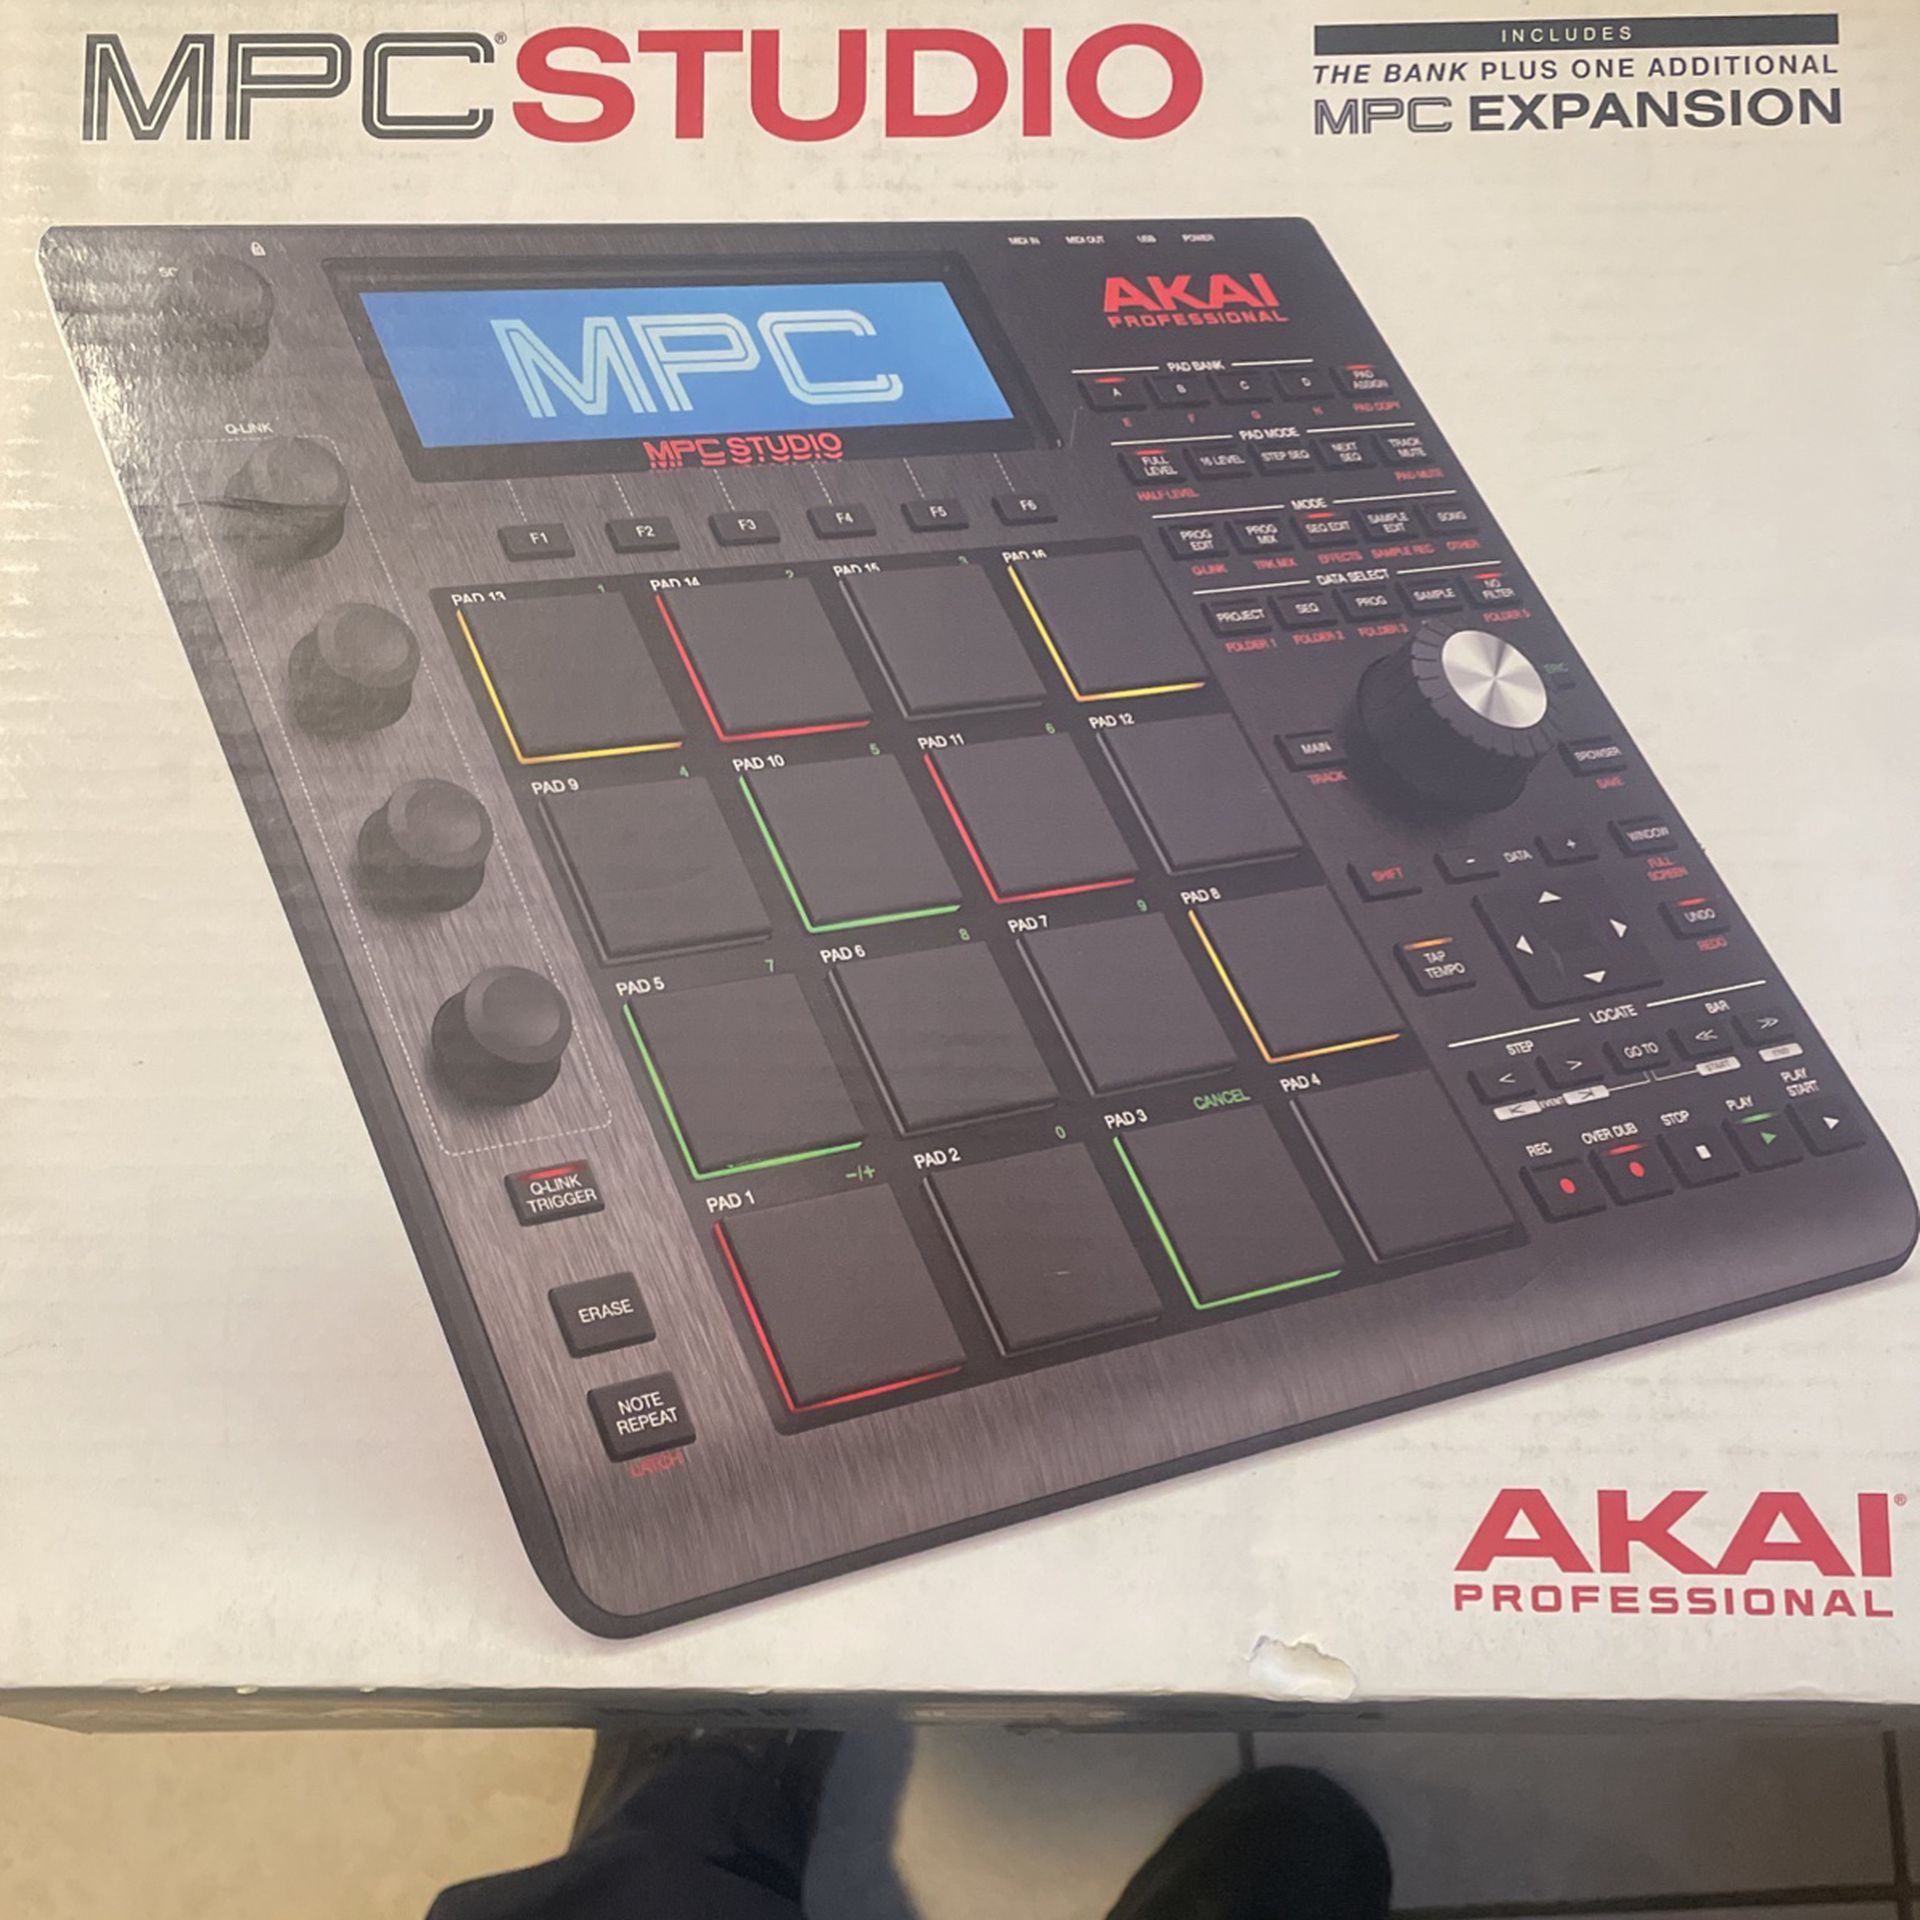 MPC studio Akai Professional